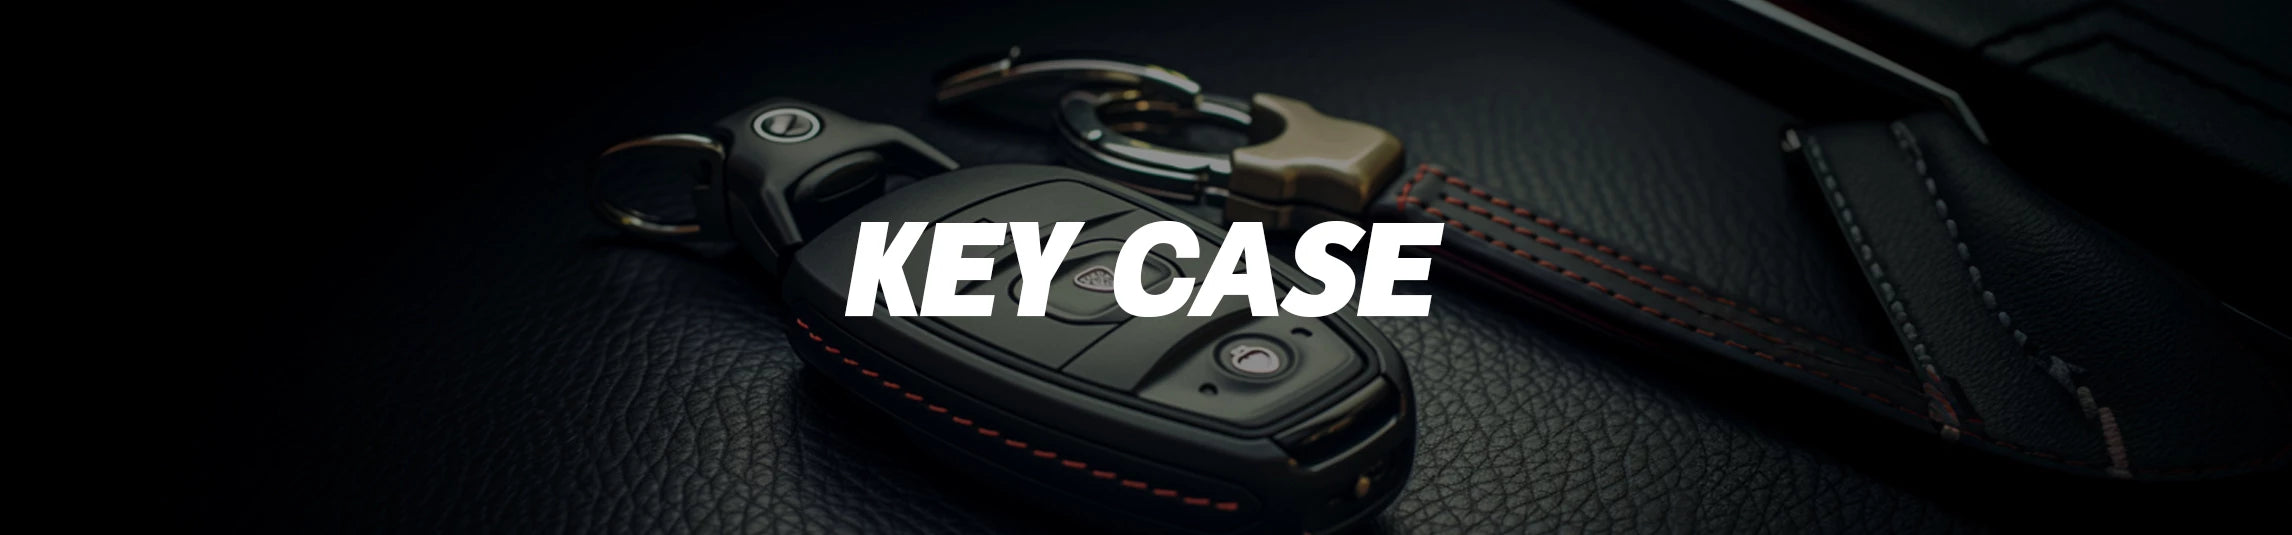 key case